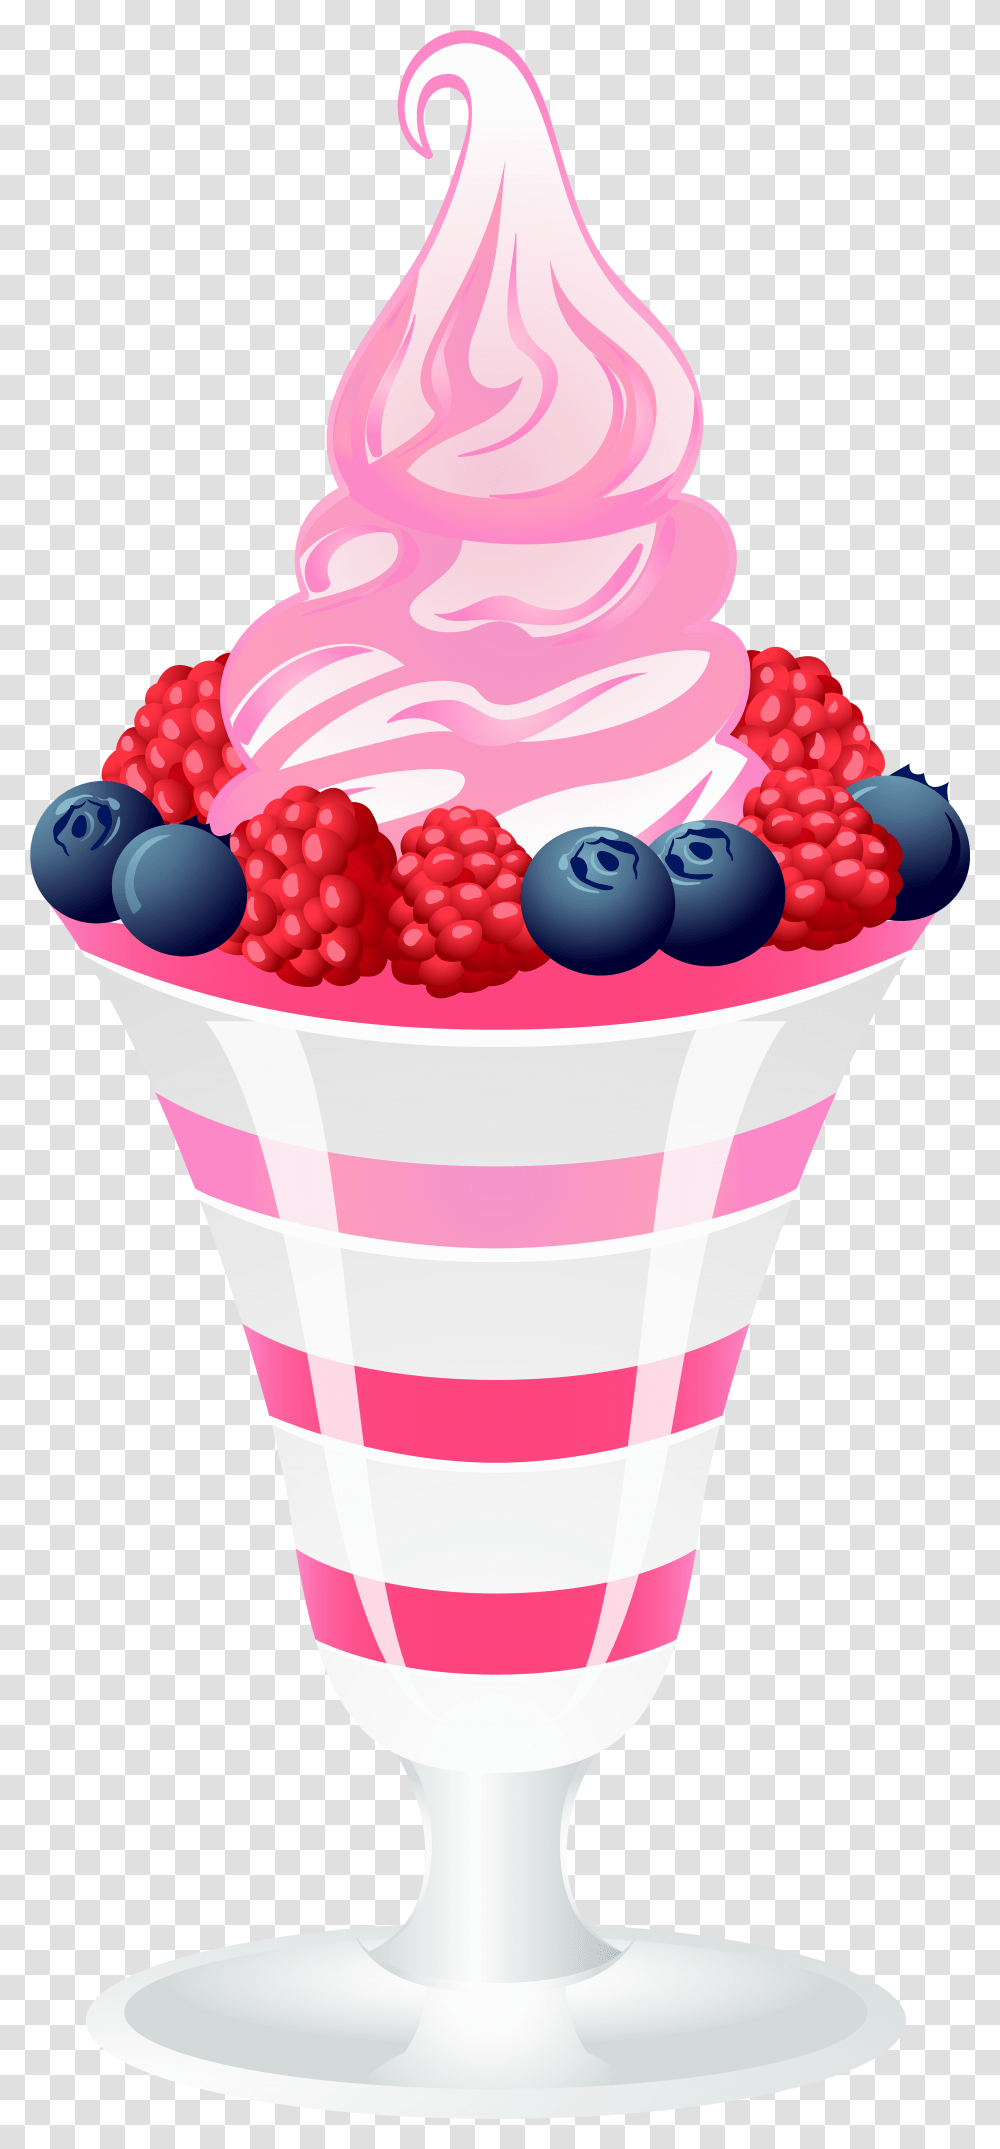 Ice Cream Sundae With Raspberries And Blackberries Cupcake And Ice Cream Clipart, Dessert, Food, Creme, Birthday Cake Transparent Png